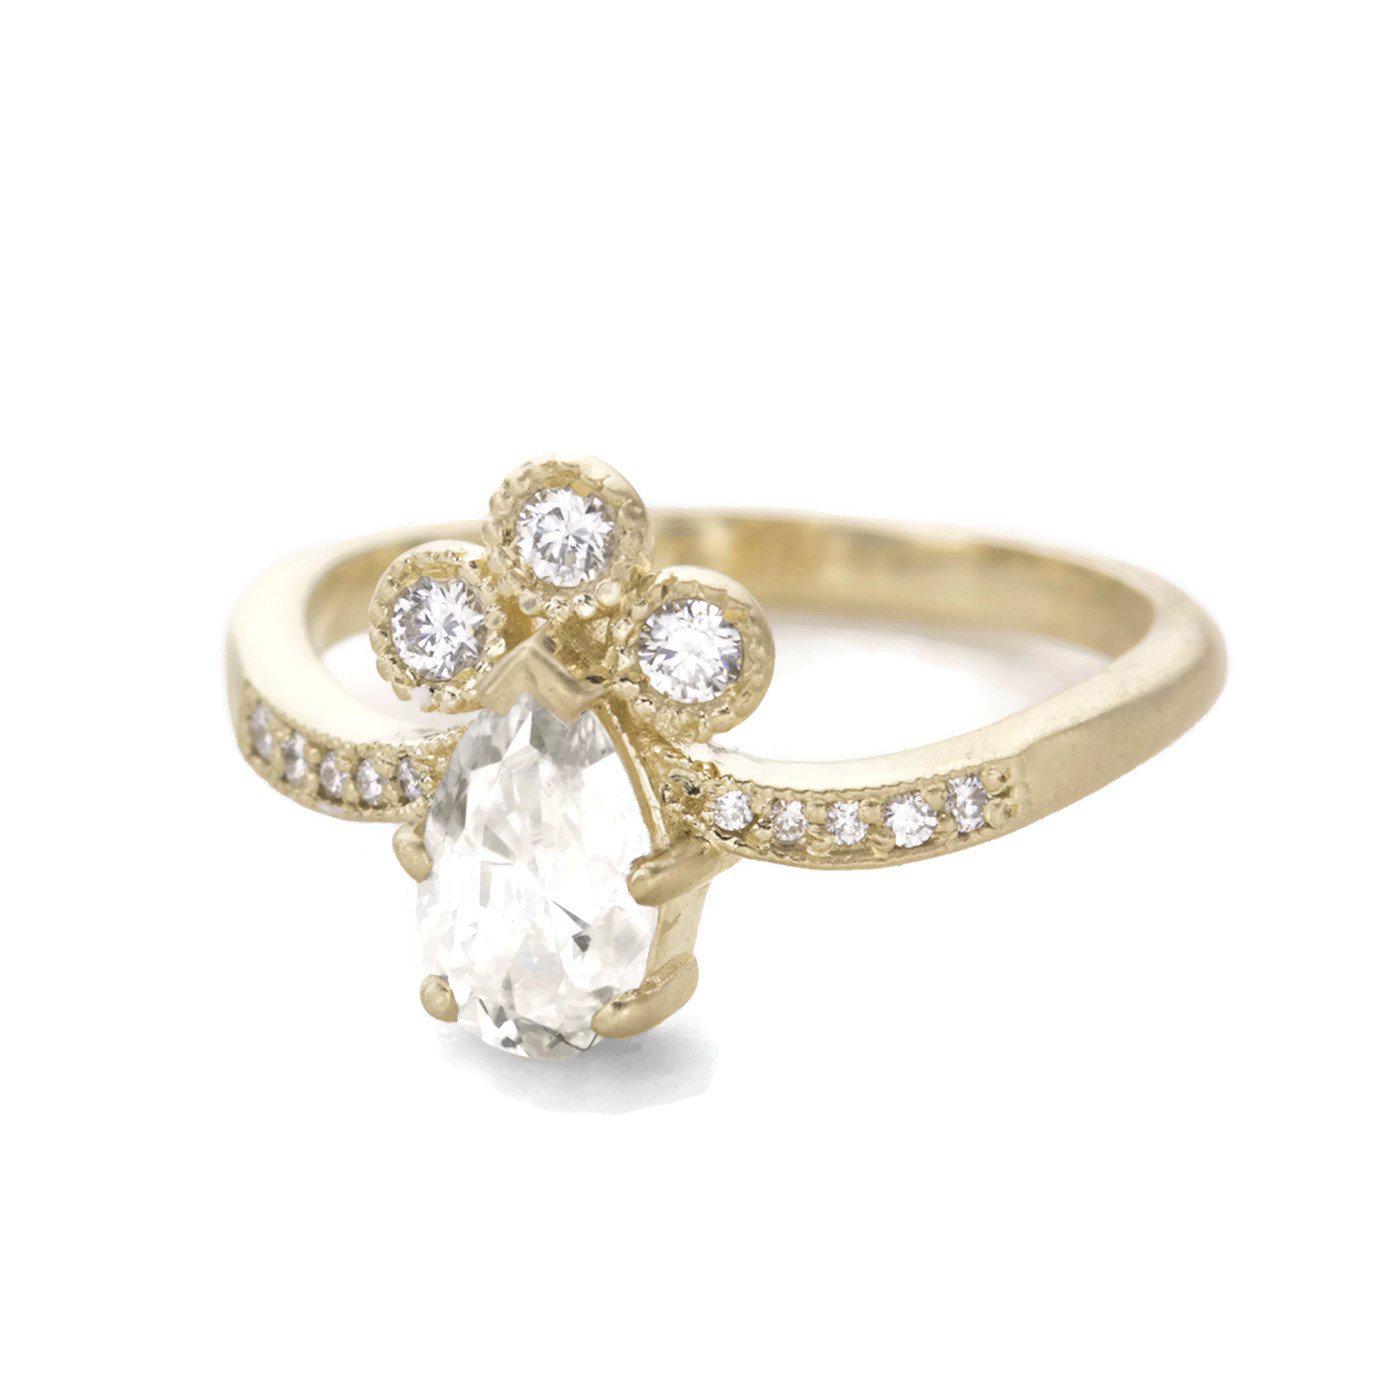 Josephine Pear Shaped Diamond Engagement Ring